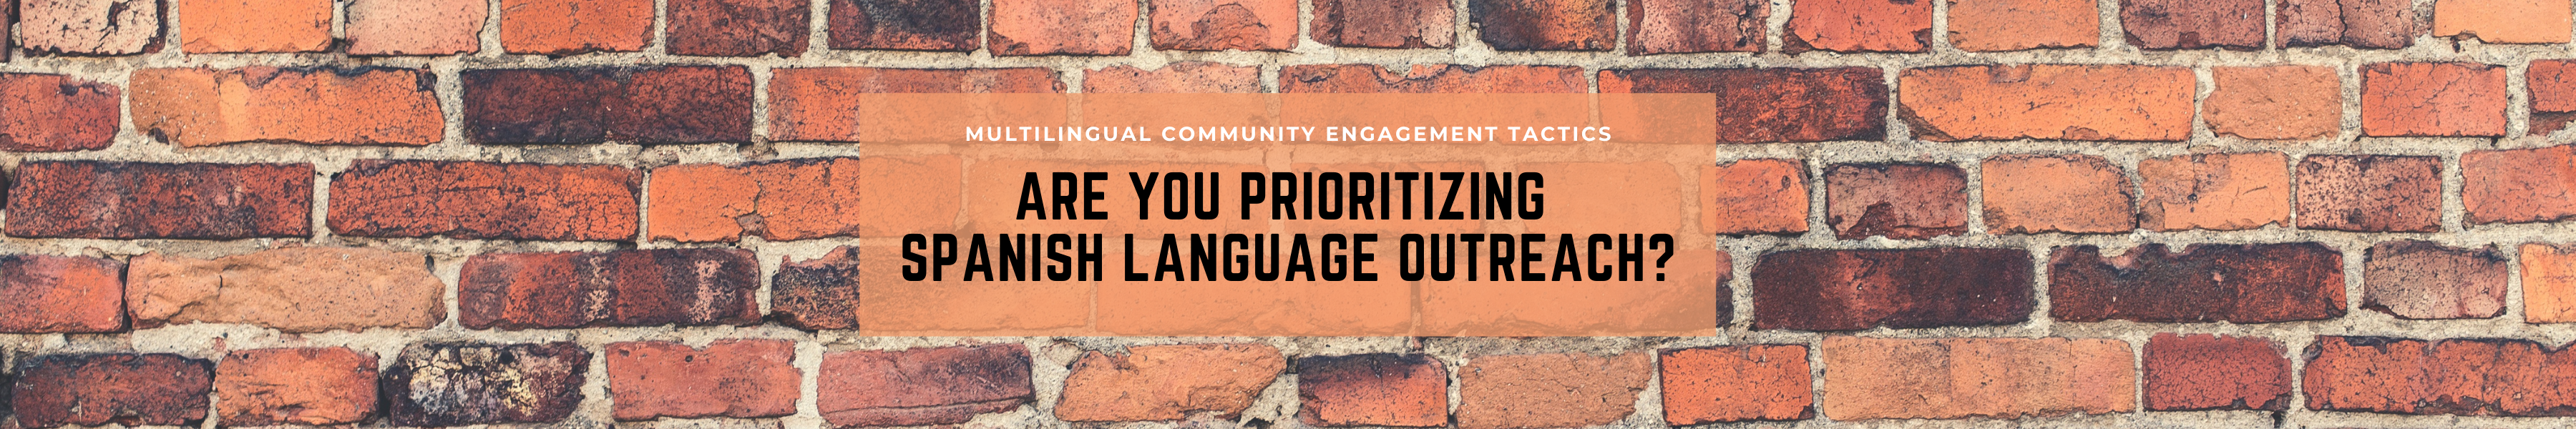 Optimizing Community Engagement for Spanish Speaking Communities